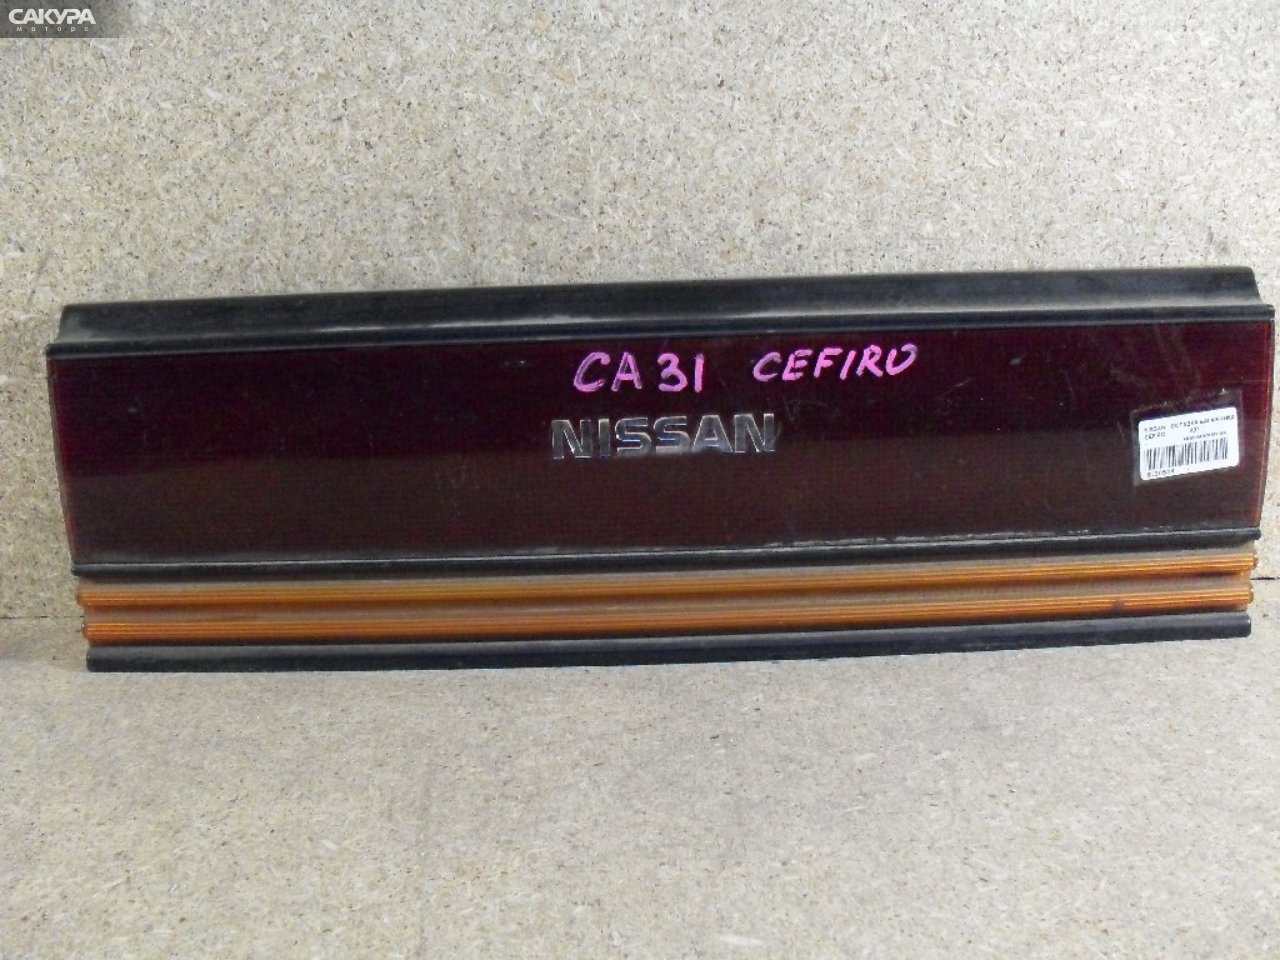 Фонарь вставка багажника Nissan Cefiro A31: купить в Сакура Абакан.